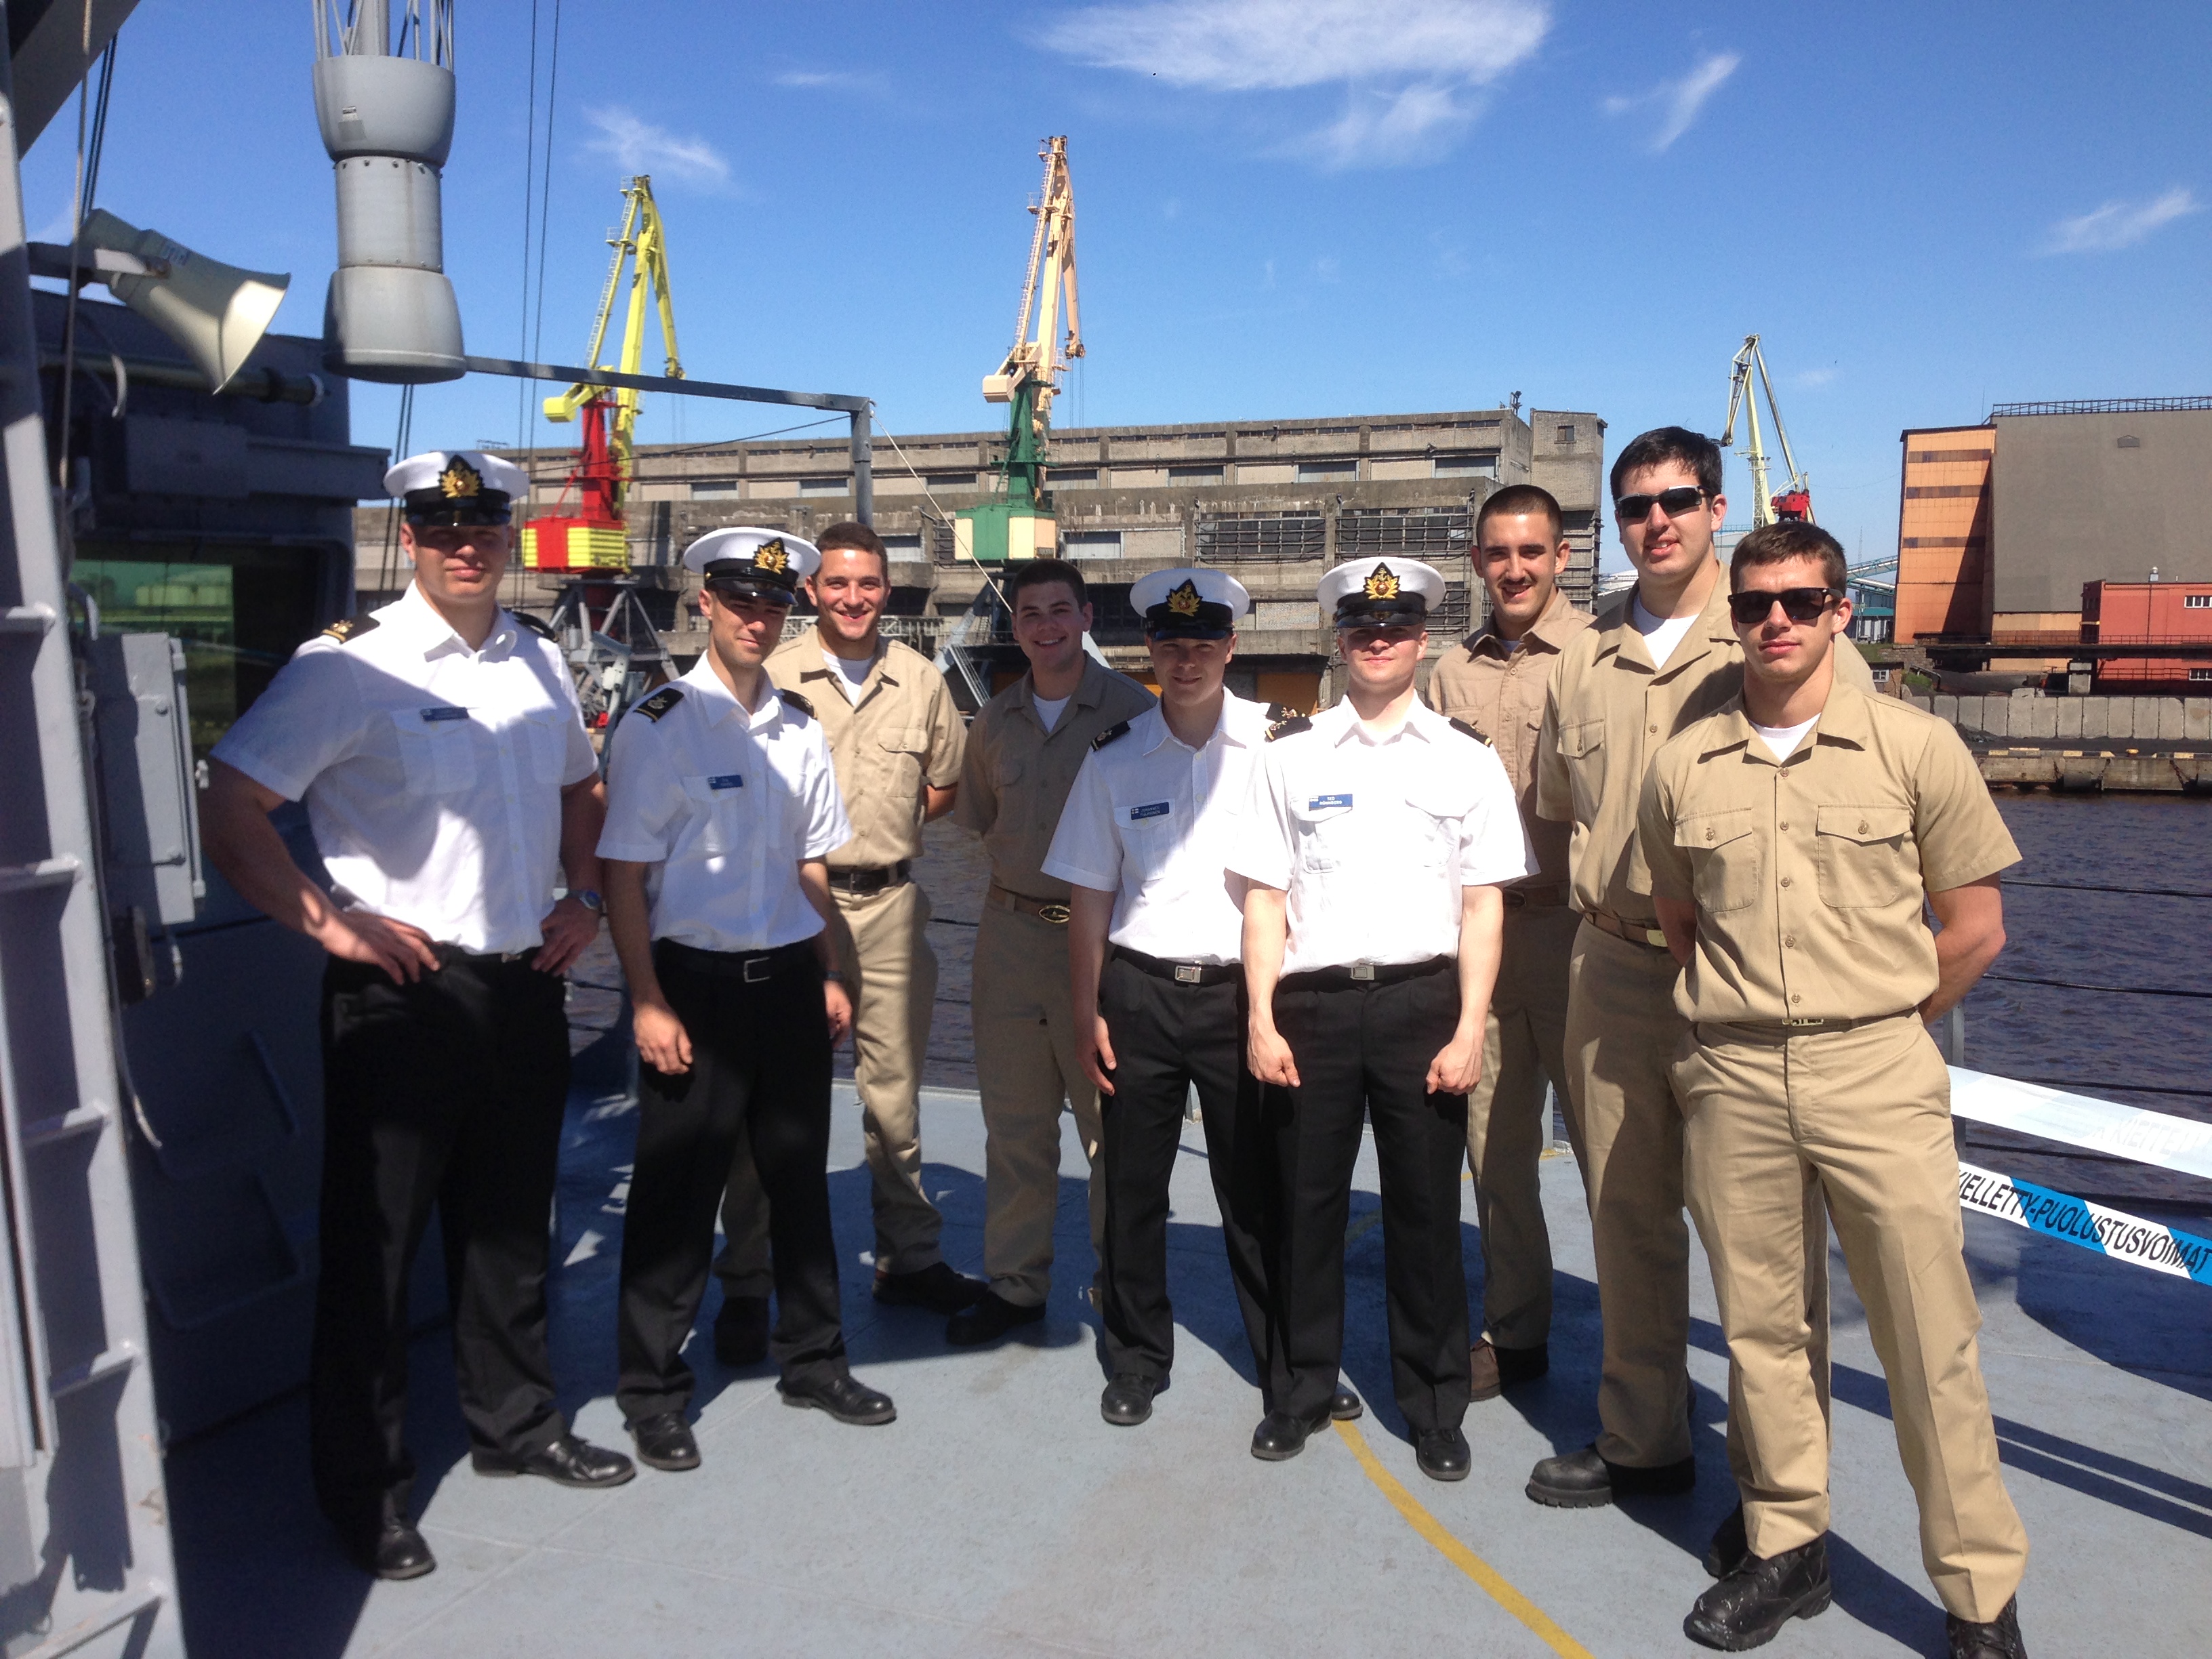 Midshipmen Jacob Doerfler, Collin Henton, Antonio Mistron with Finnish Naval Academy Midshipmen